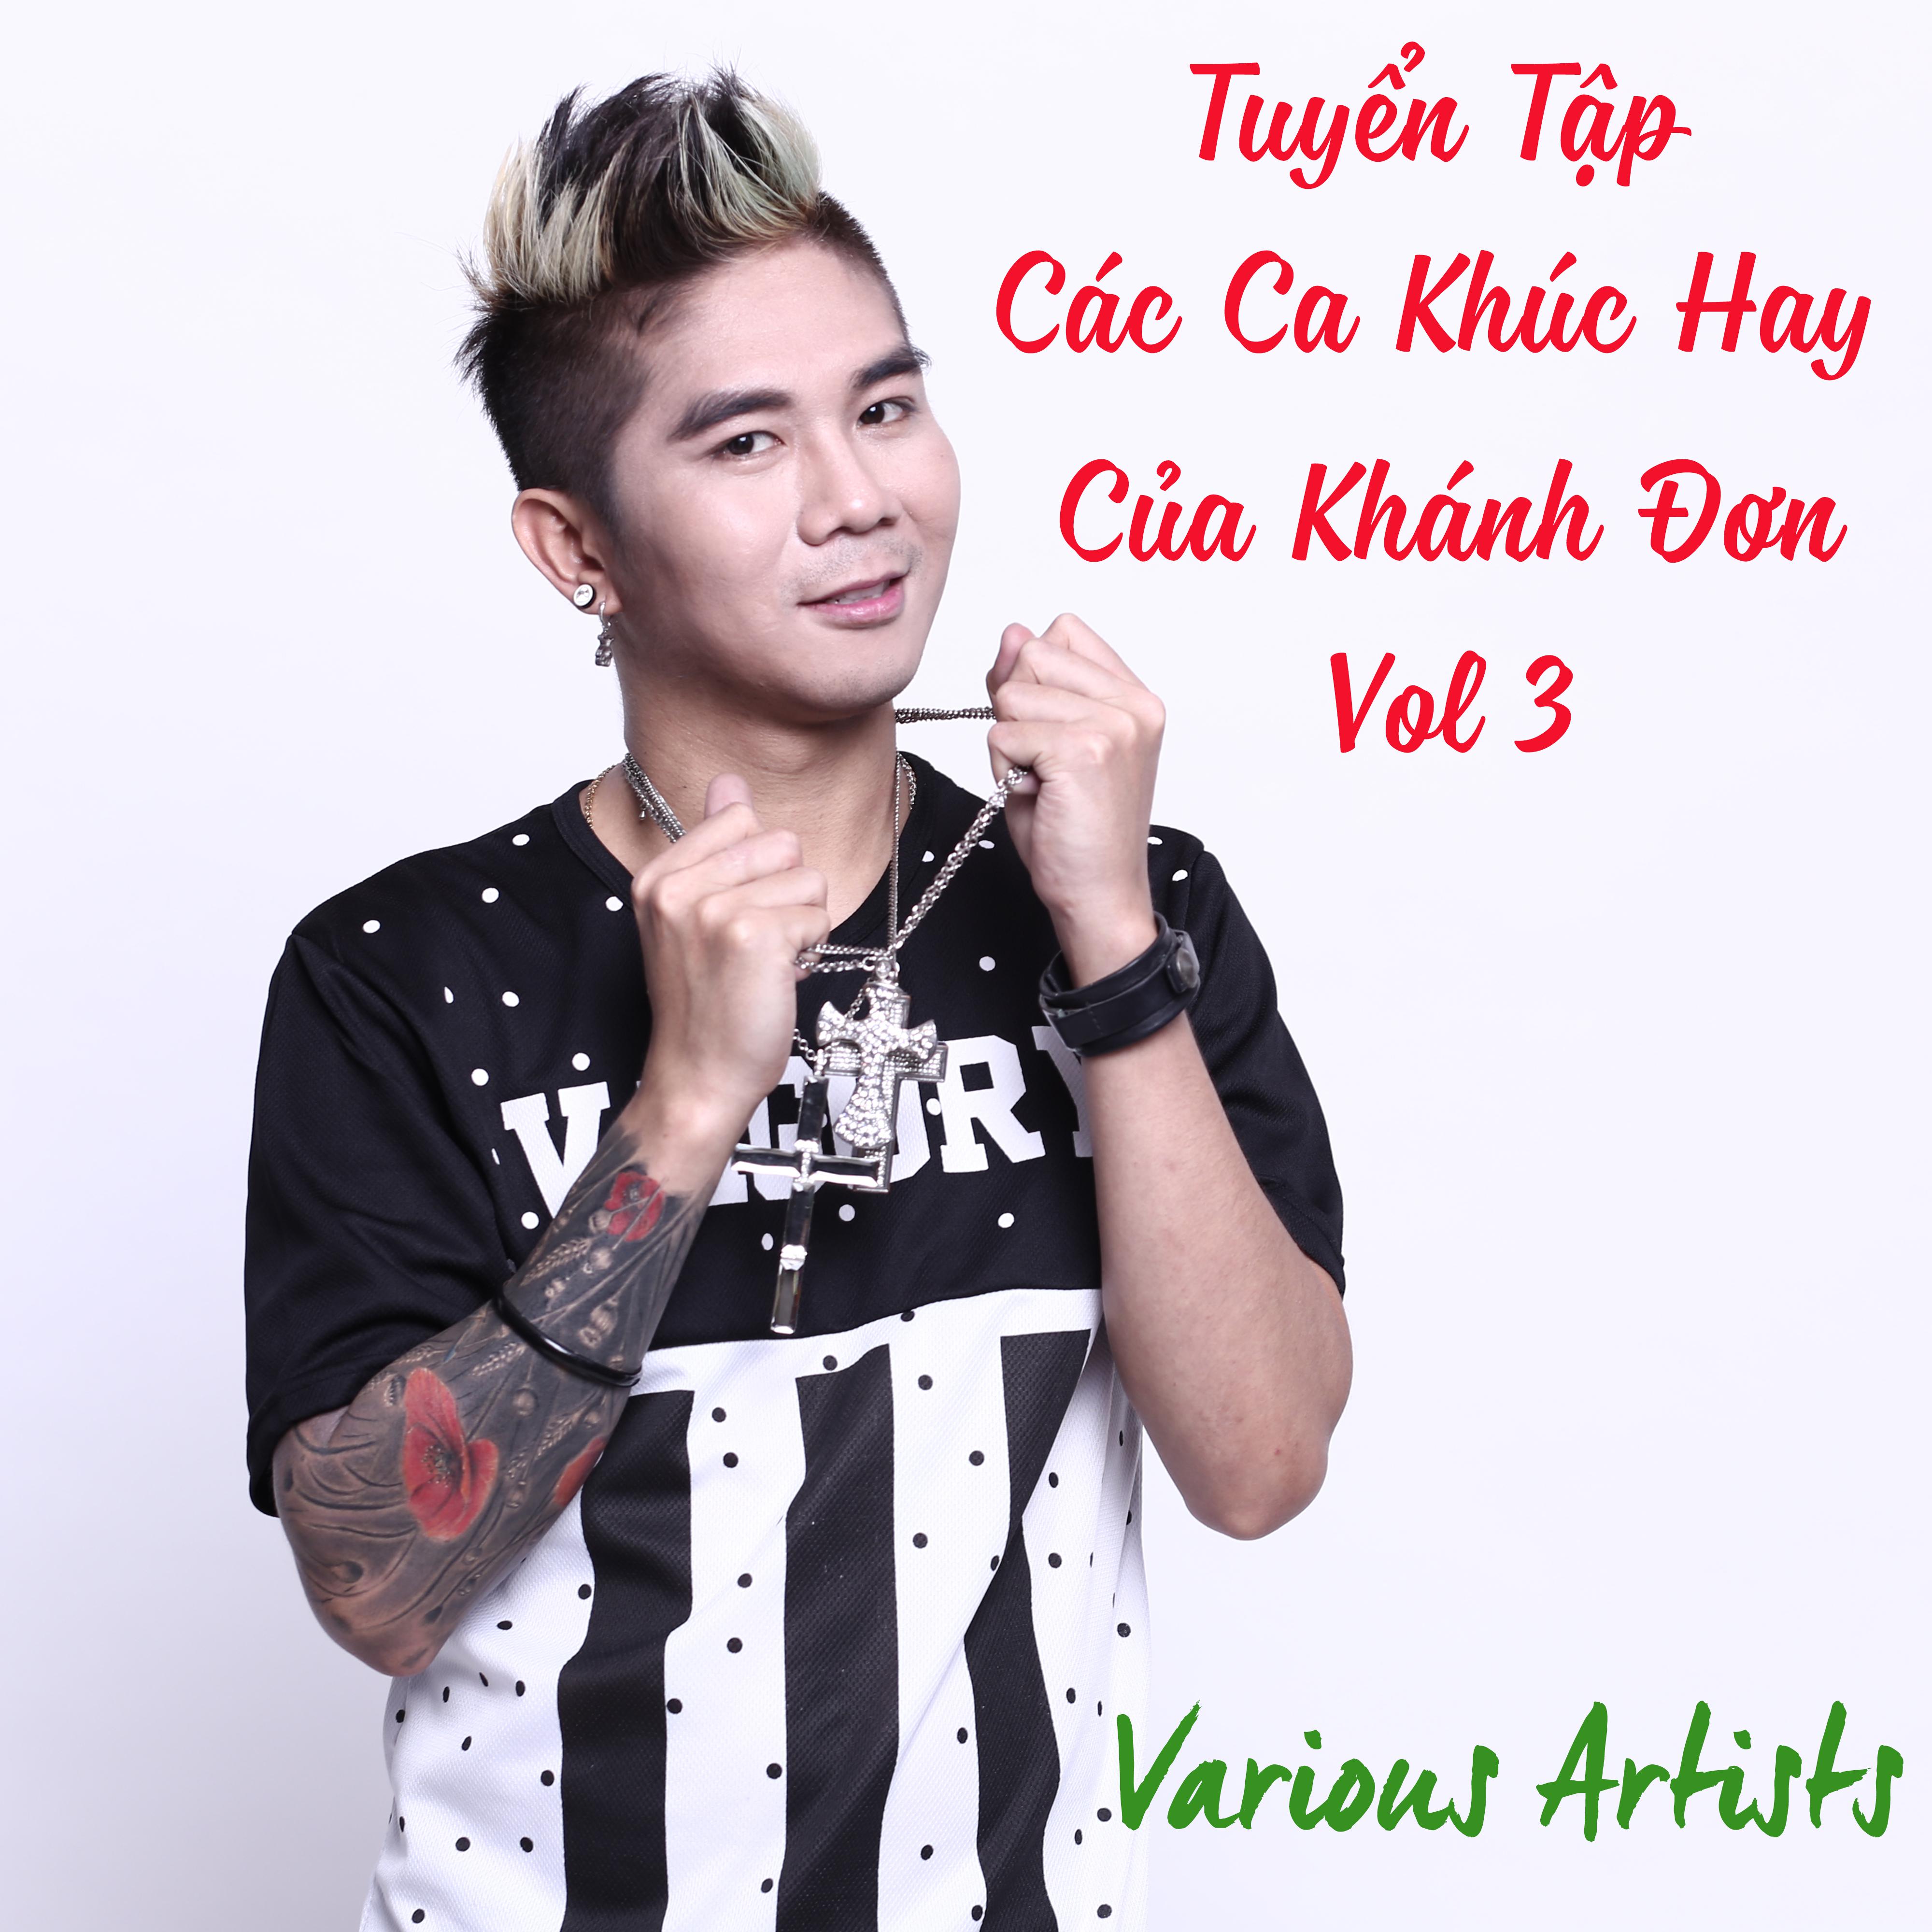 Huyen Thoai - Viet Nam Co Len